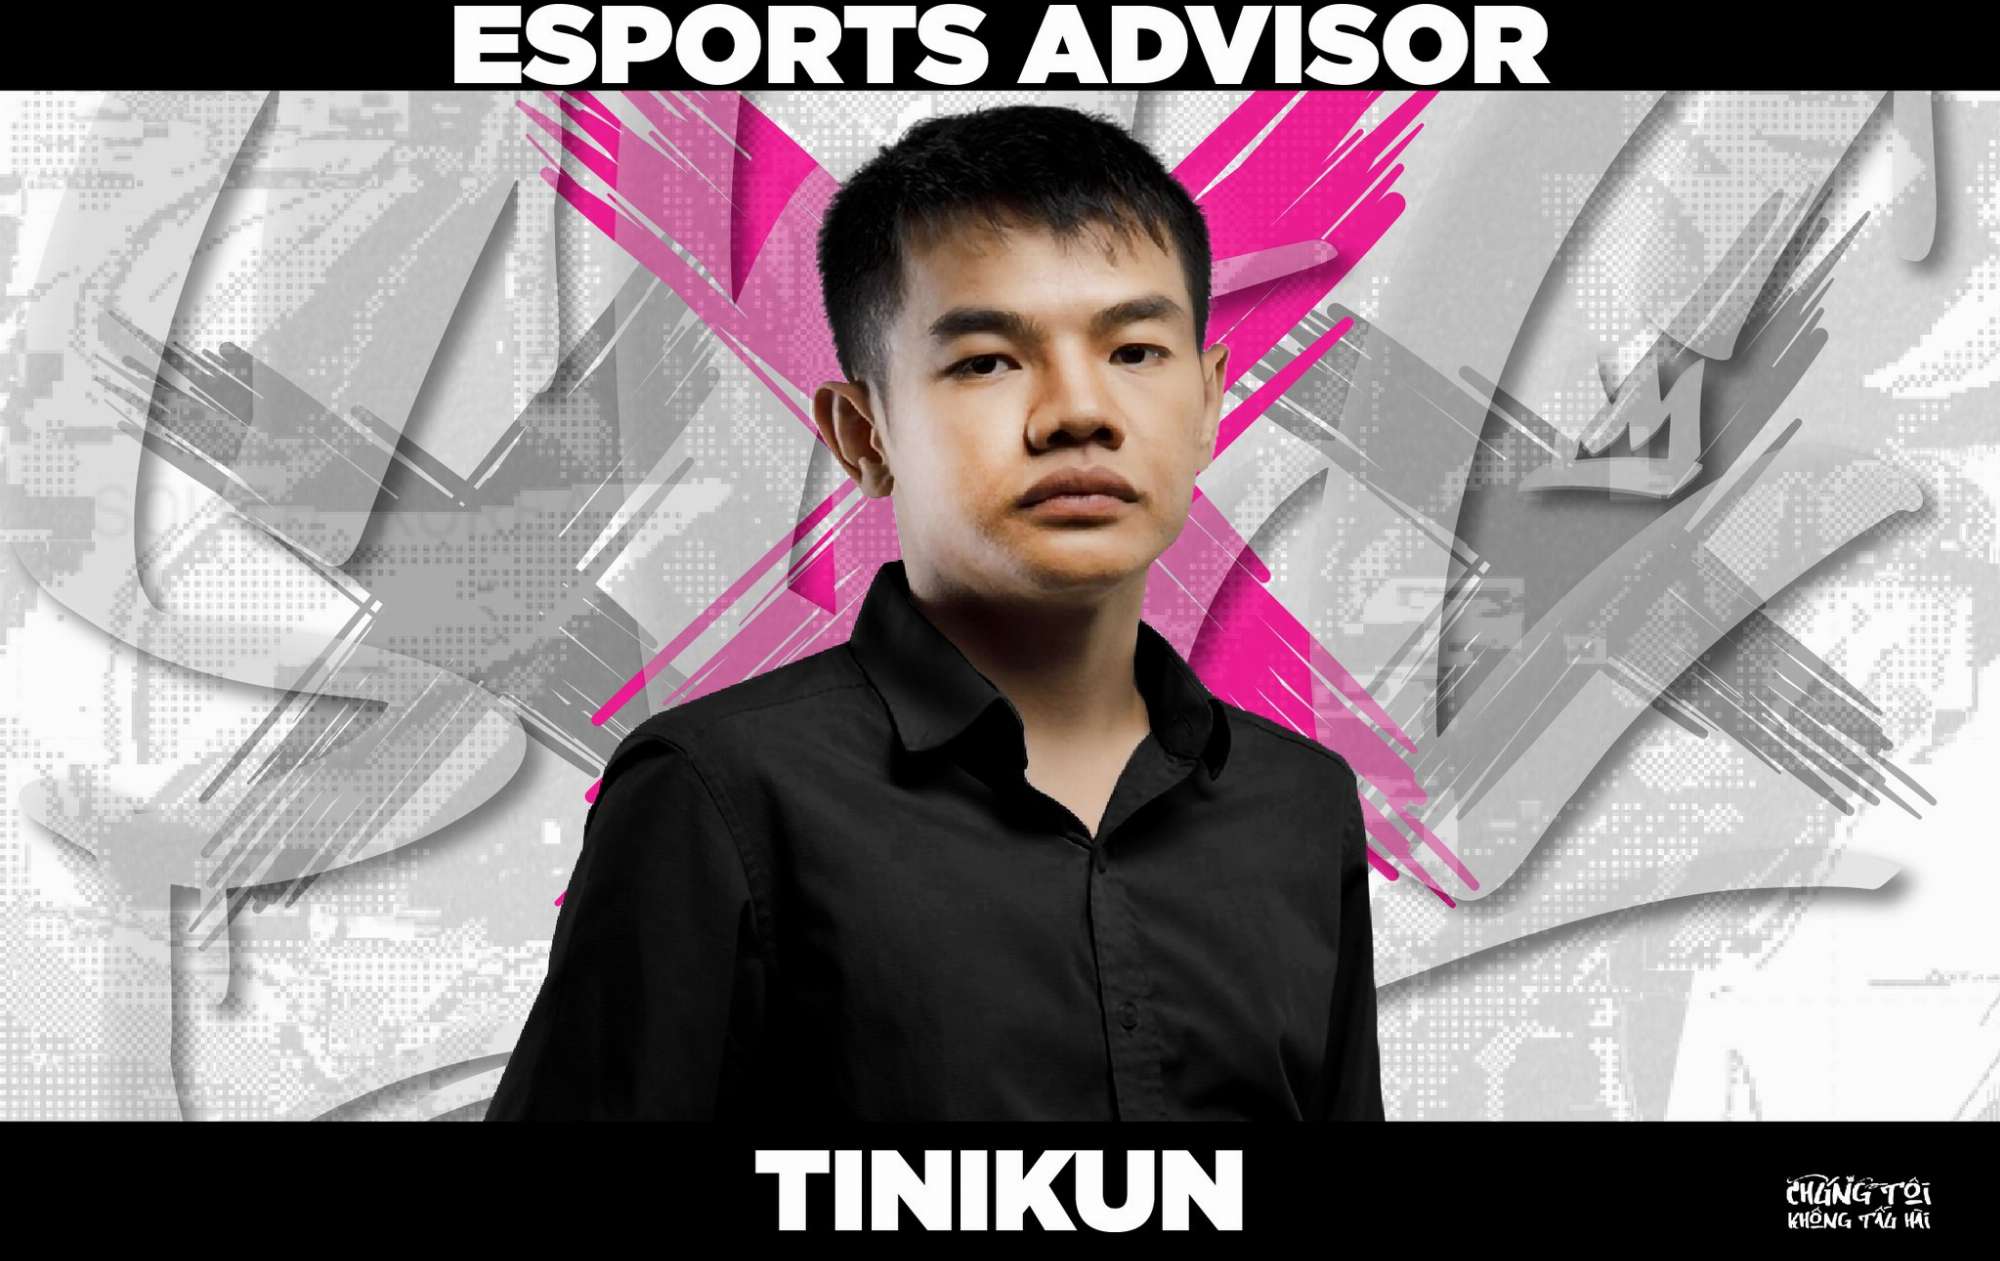 Tinikun will be the new expert advisor of SBTC Esports.